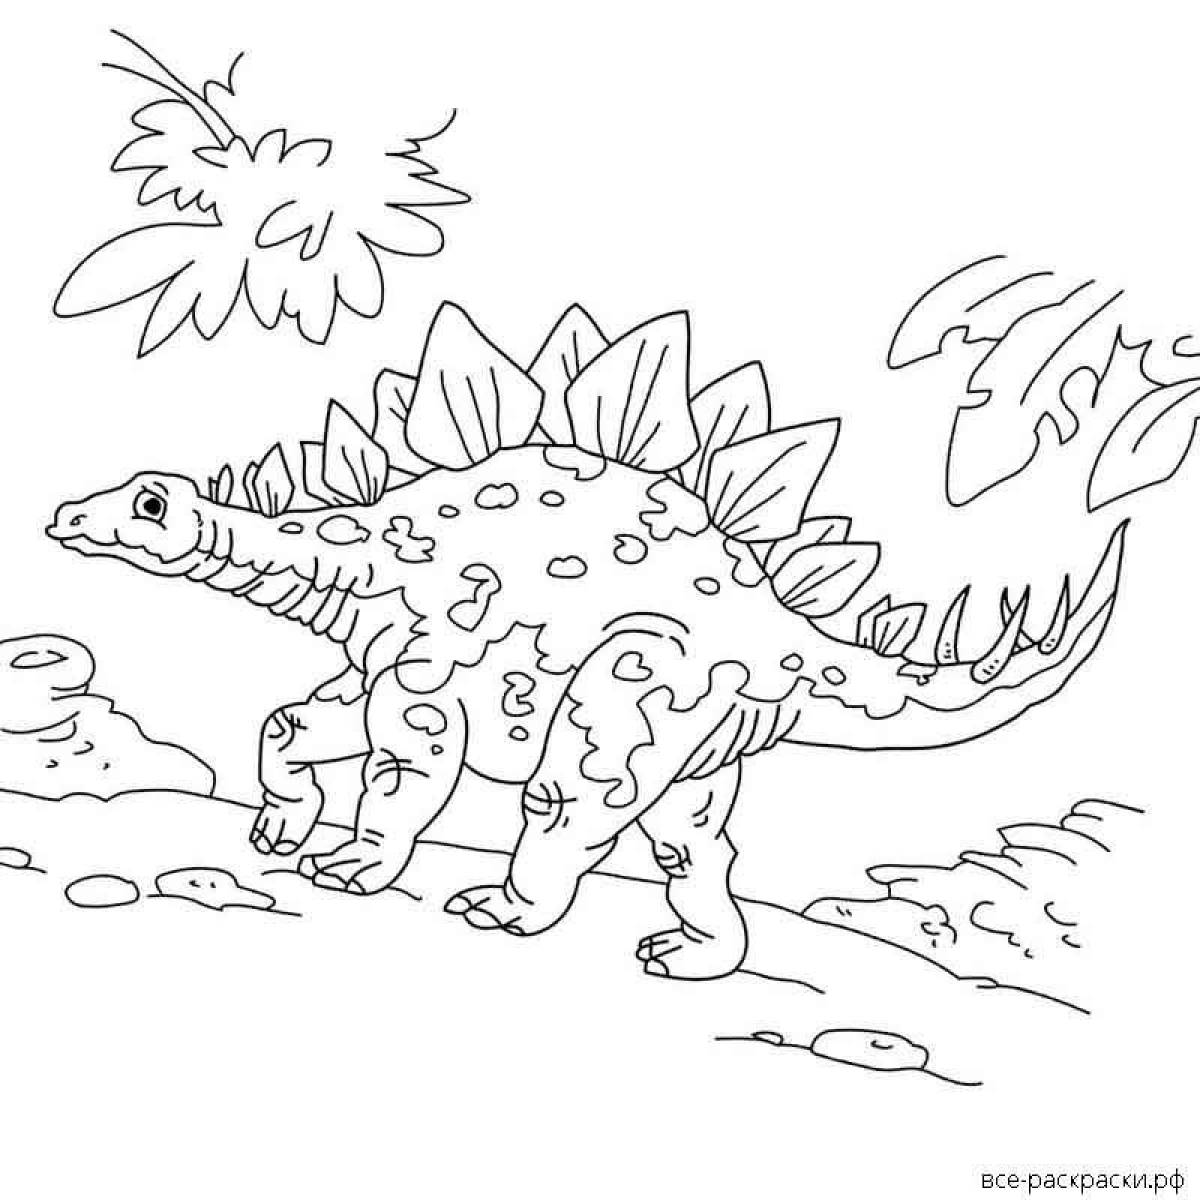 Coloring page elegant stegosaurus